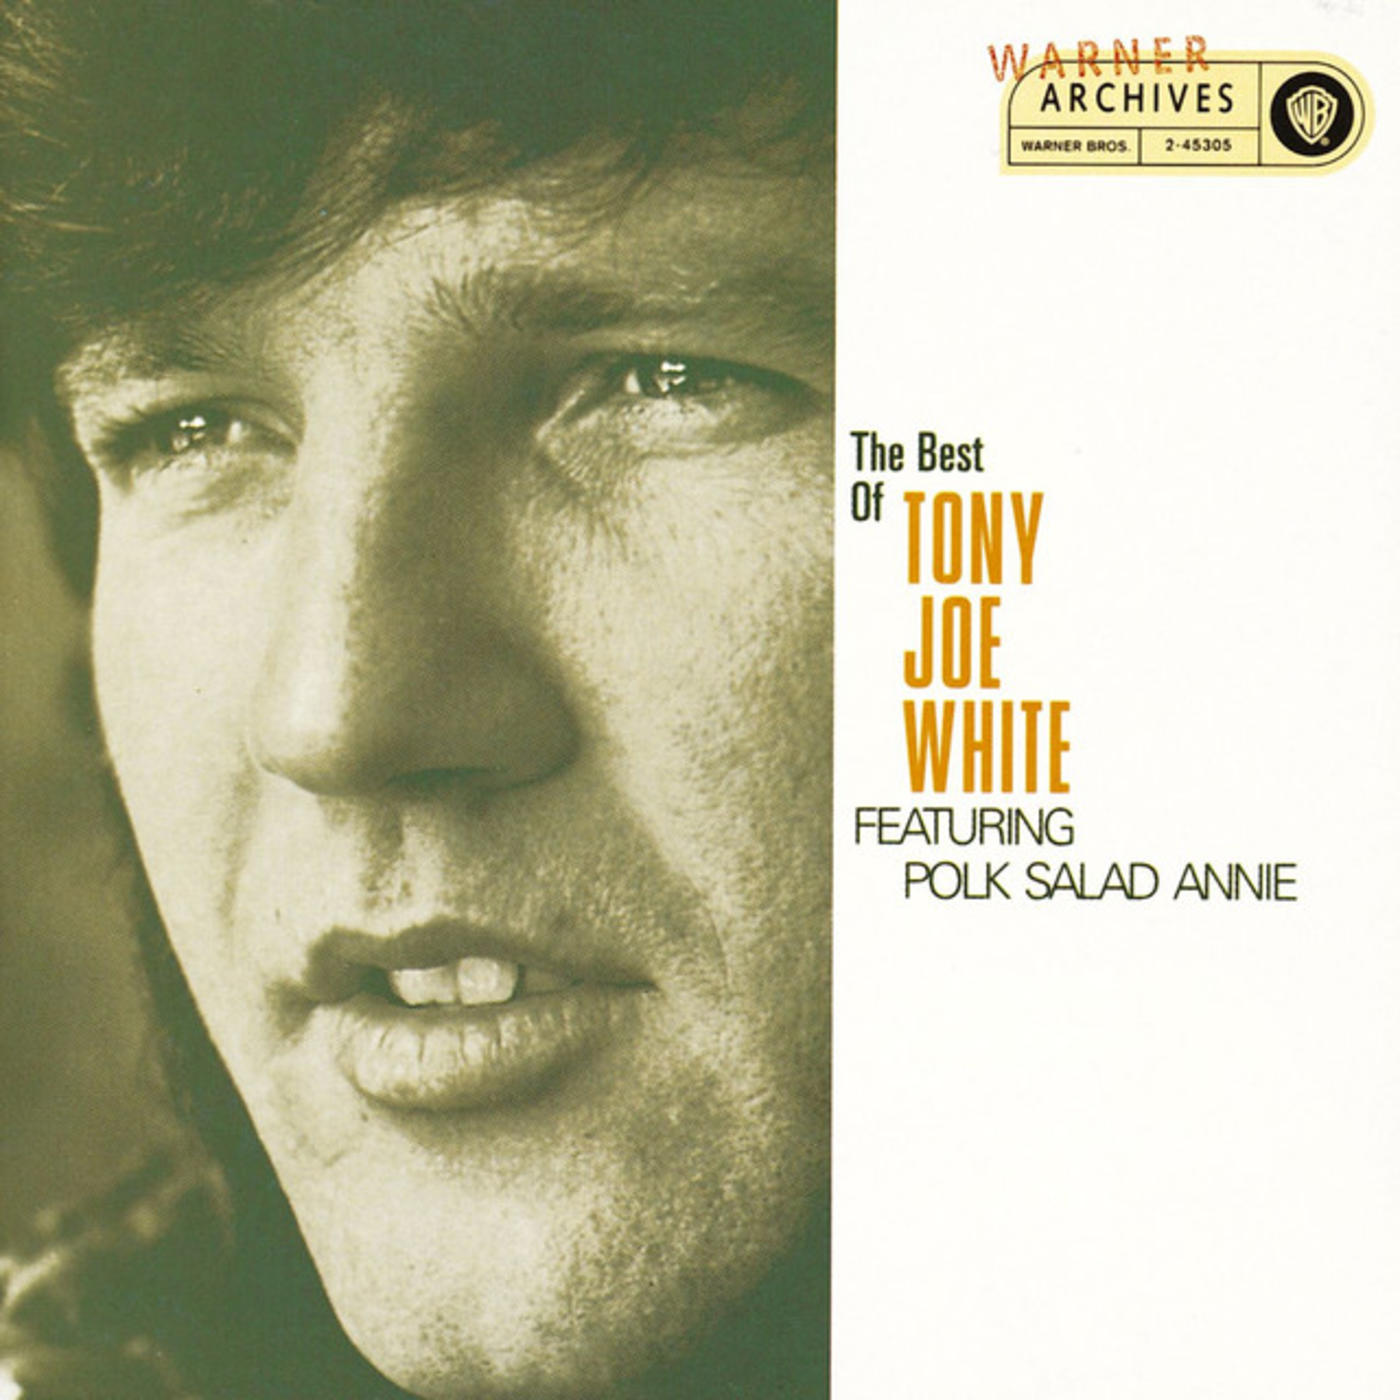 The Best Of Tony Joe White featuring "Polk Salad Annie"